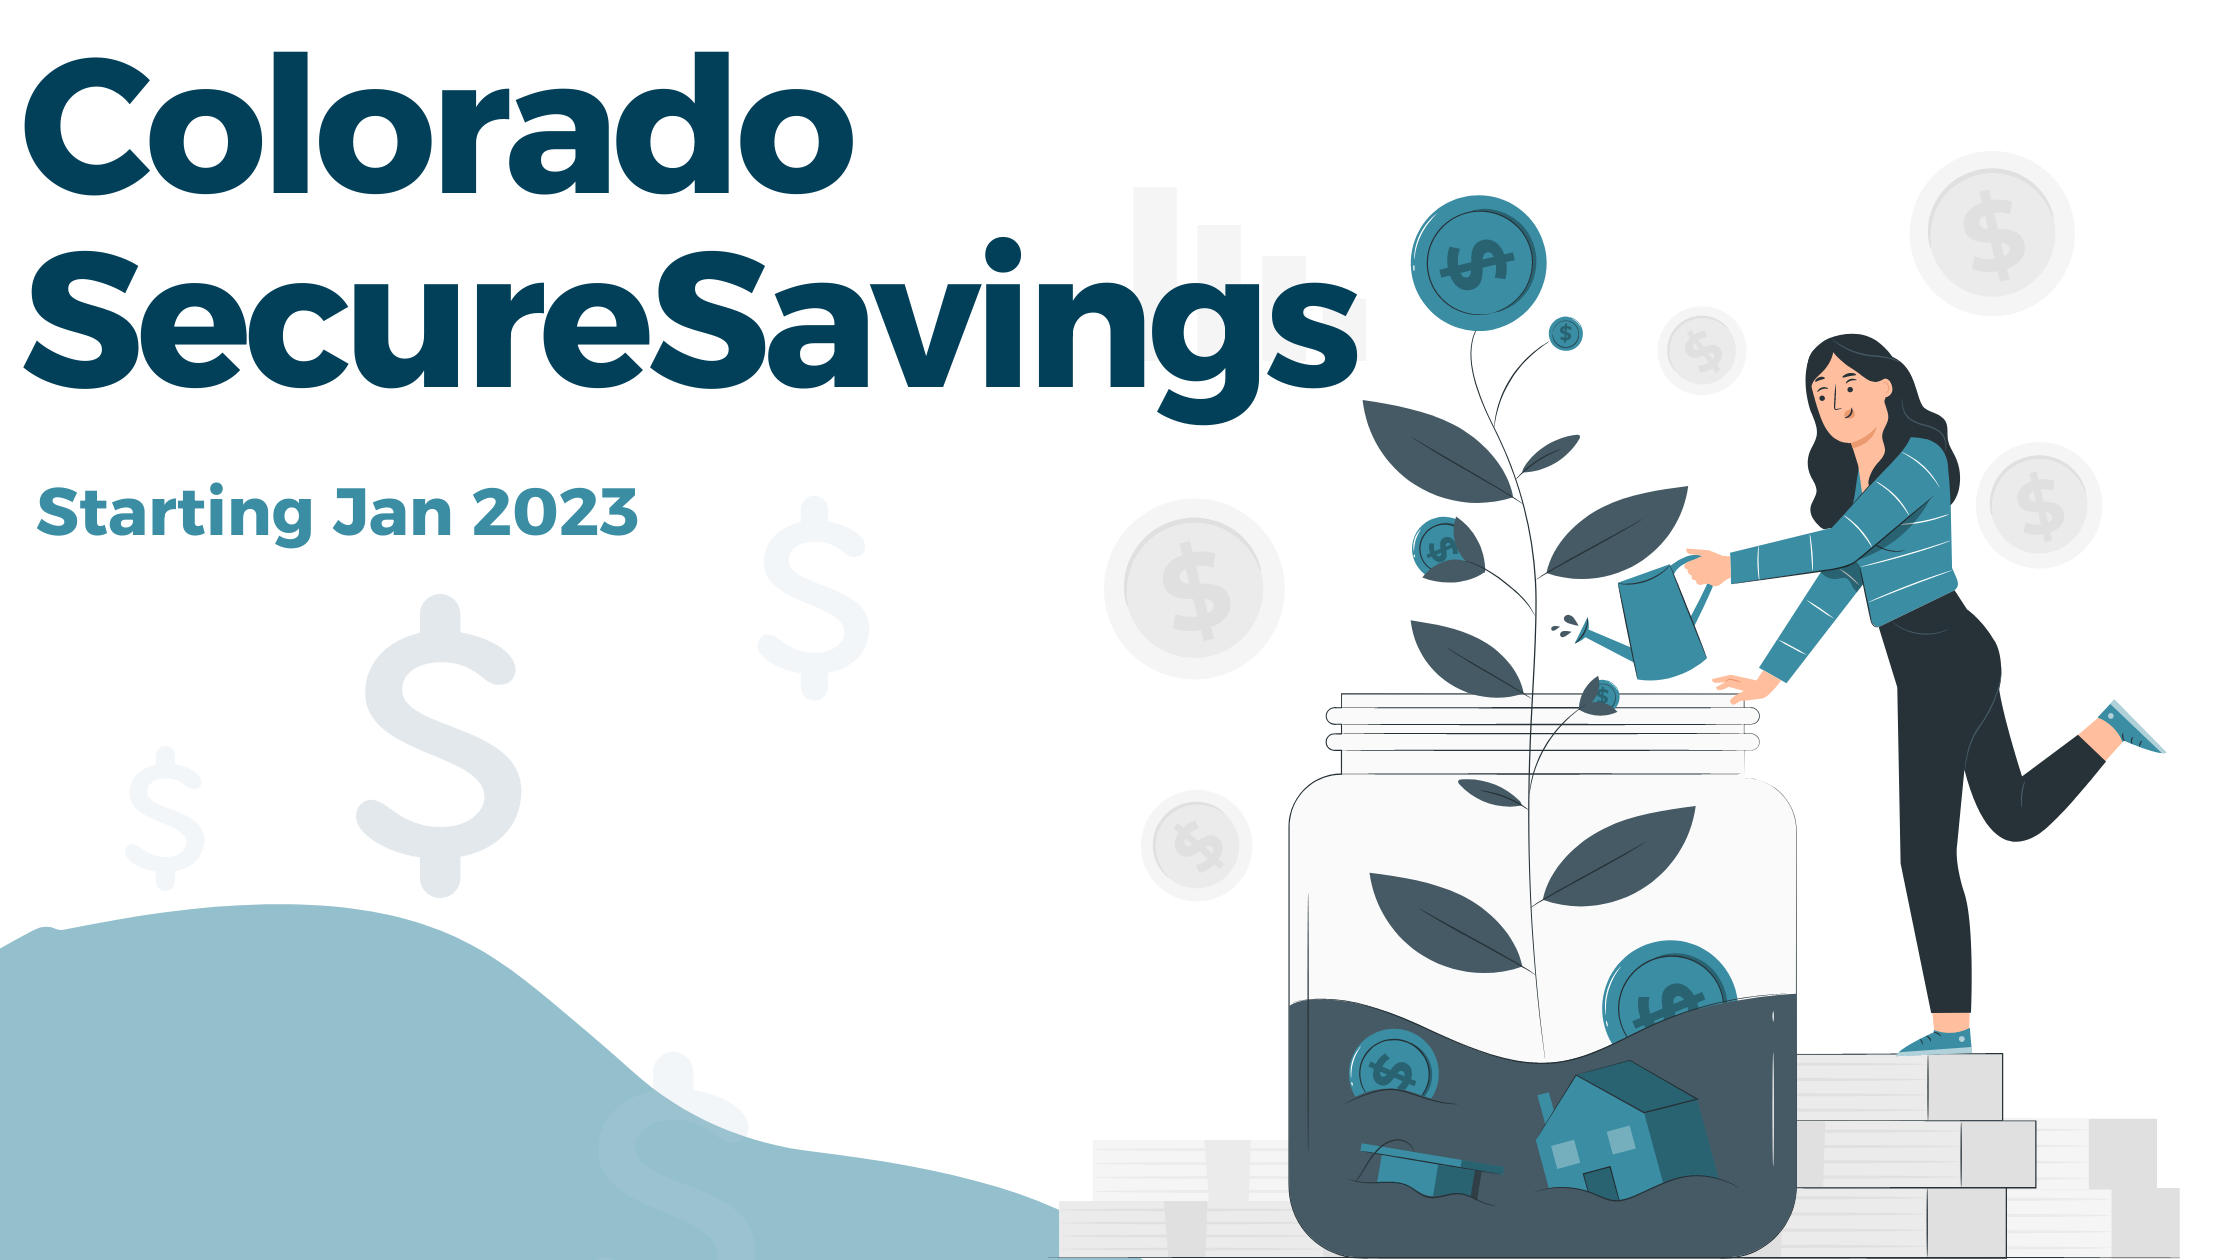 Colorado SecureSavings - Colorado's State-Mandated Retirement Savings Program